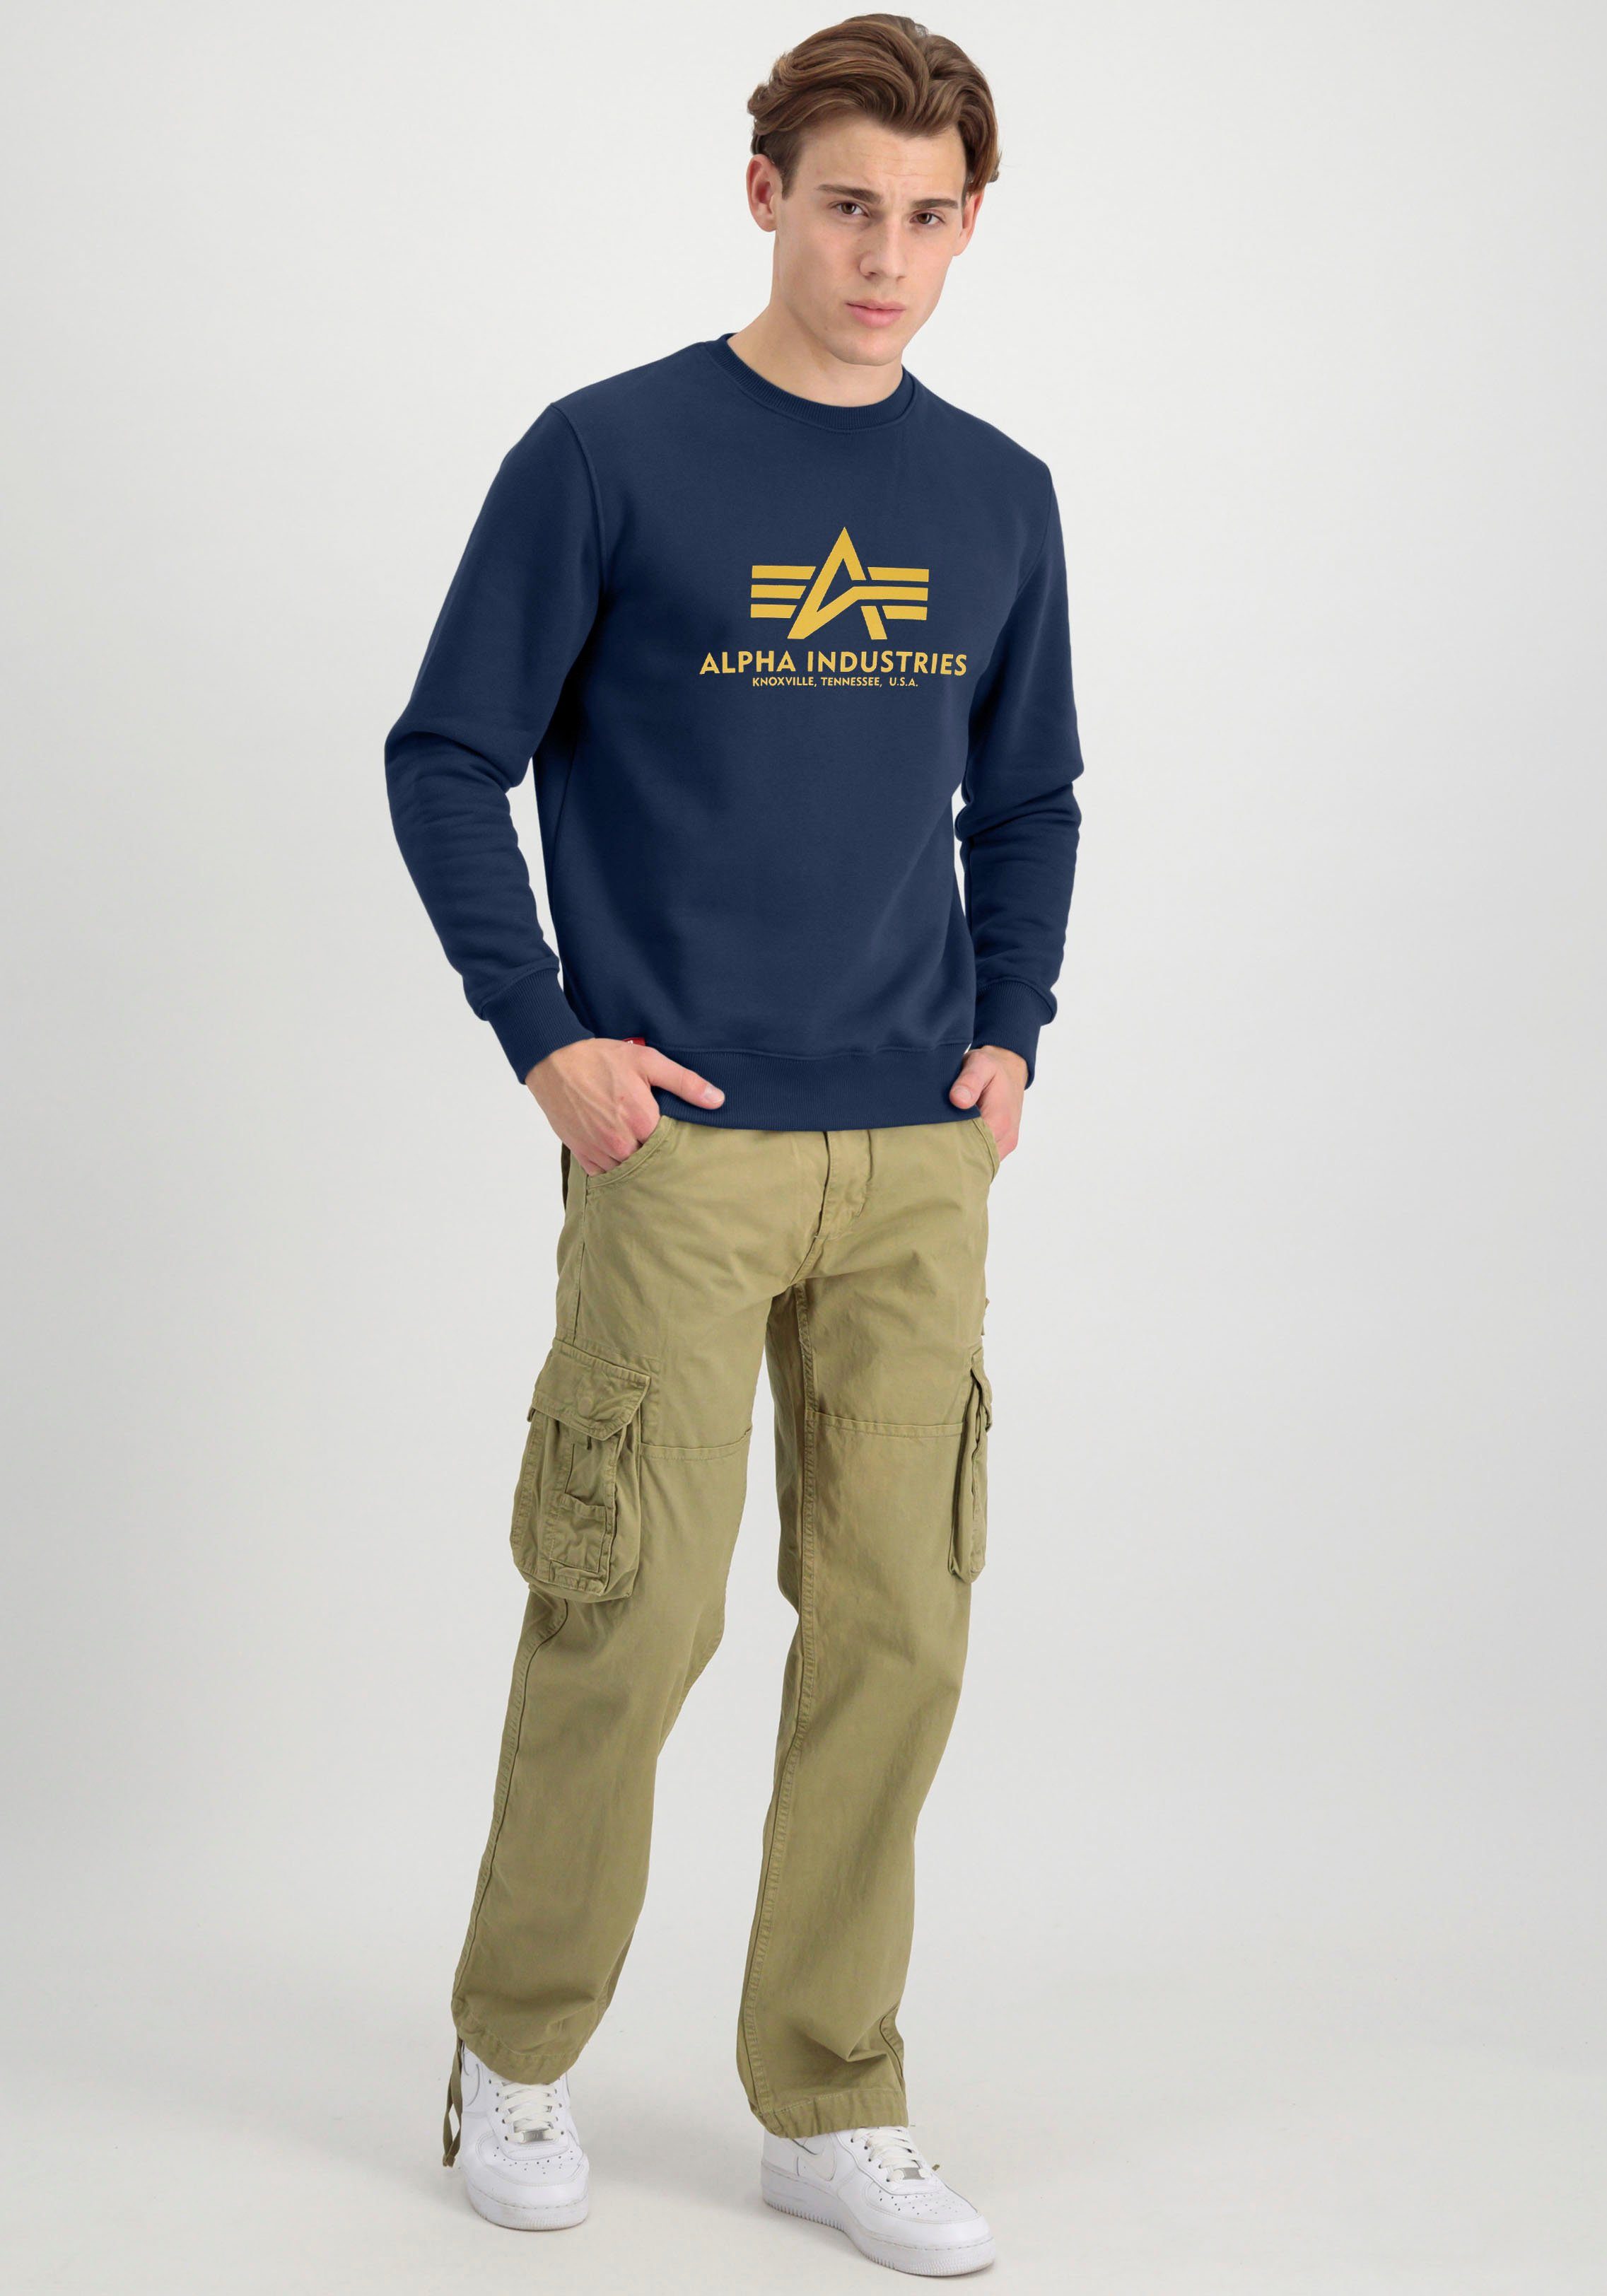 Basic Alpha Sweatshirt Industries navy Sweater new